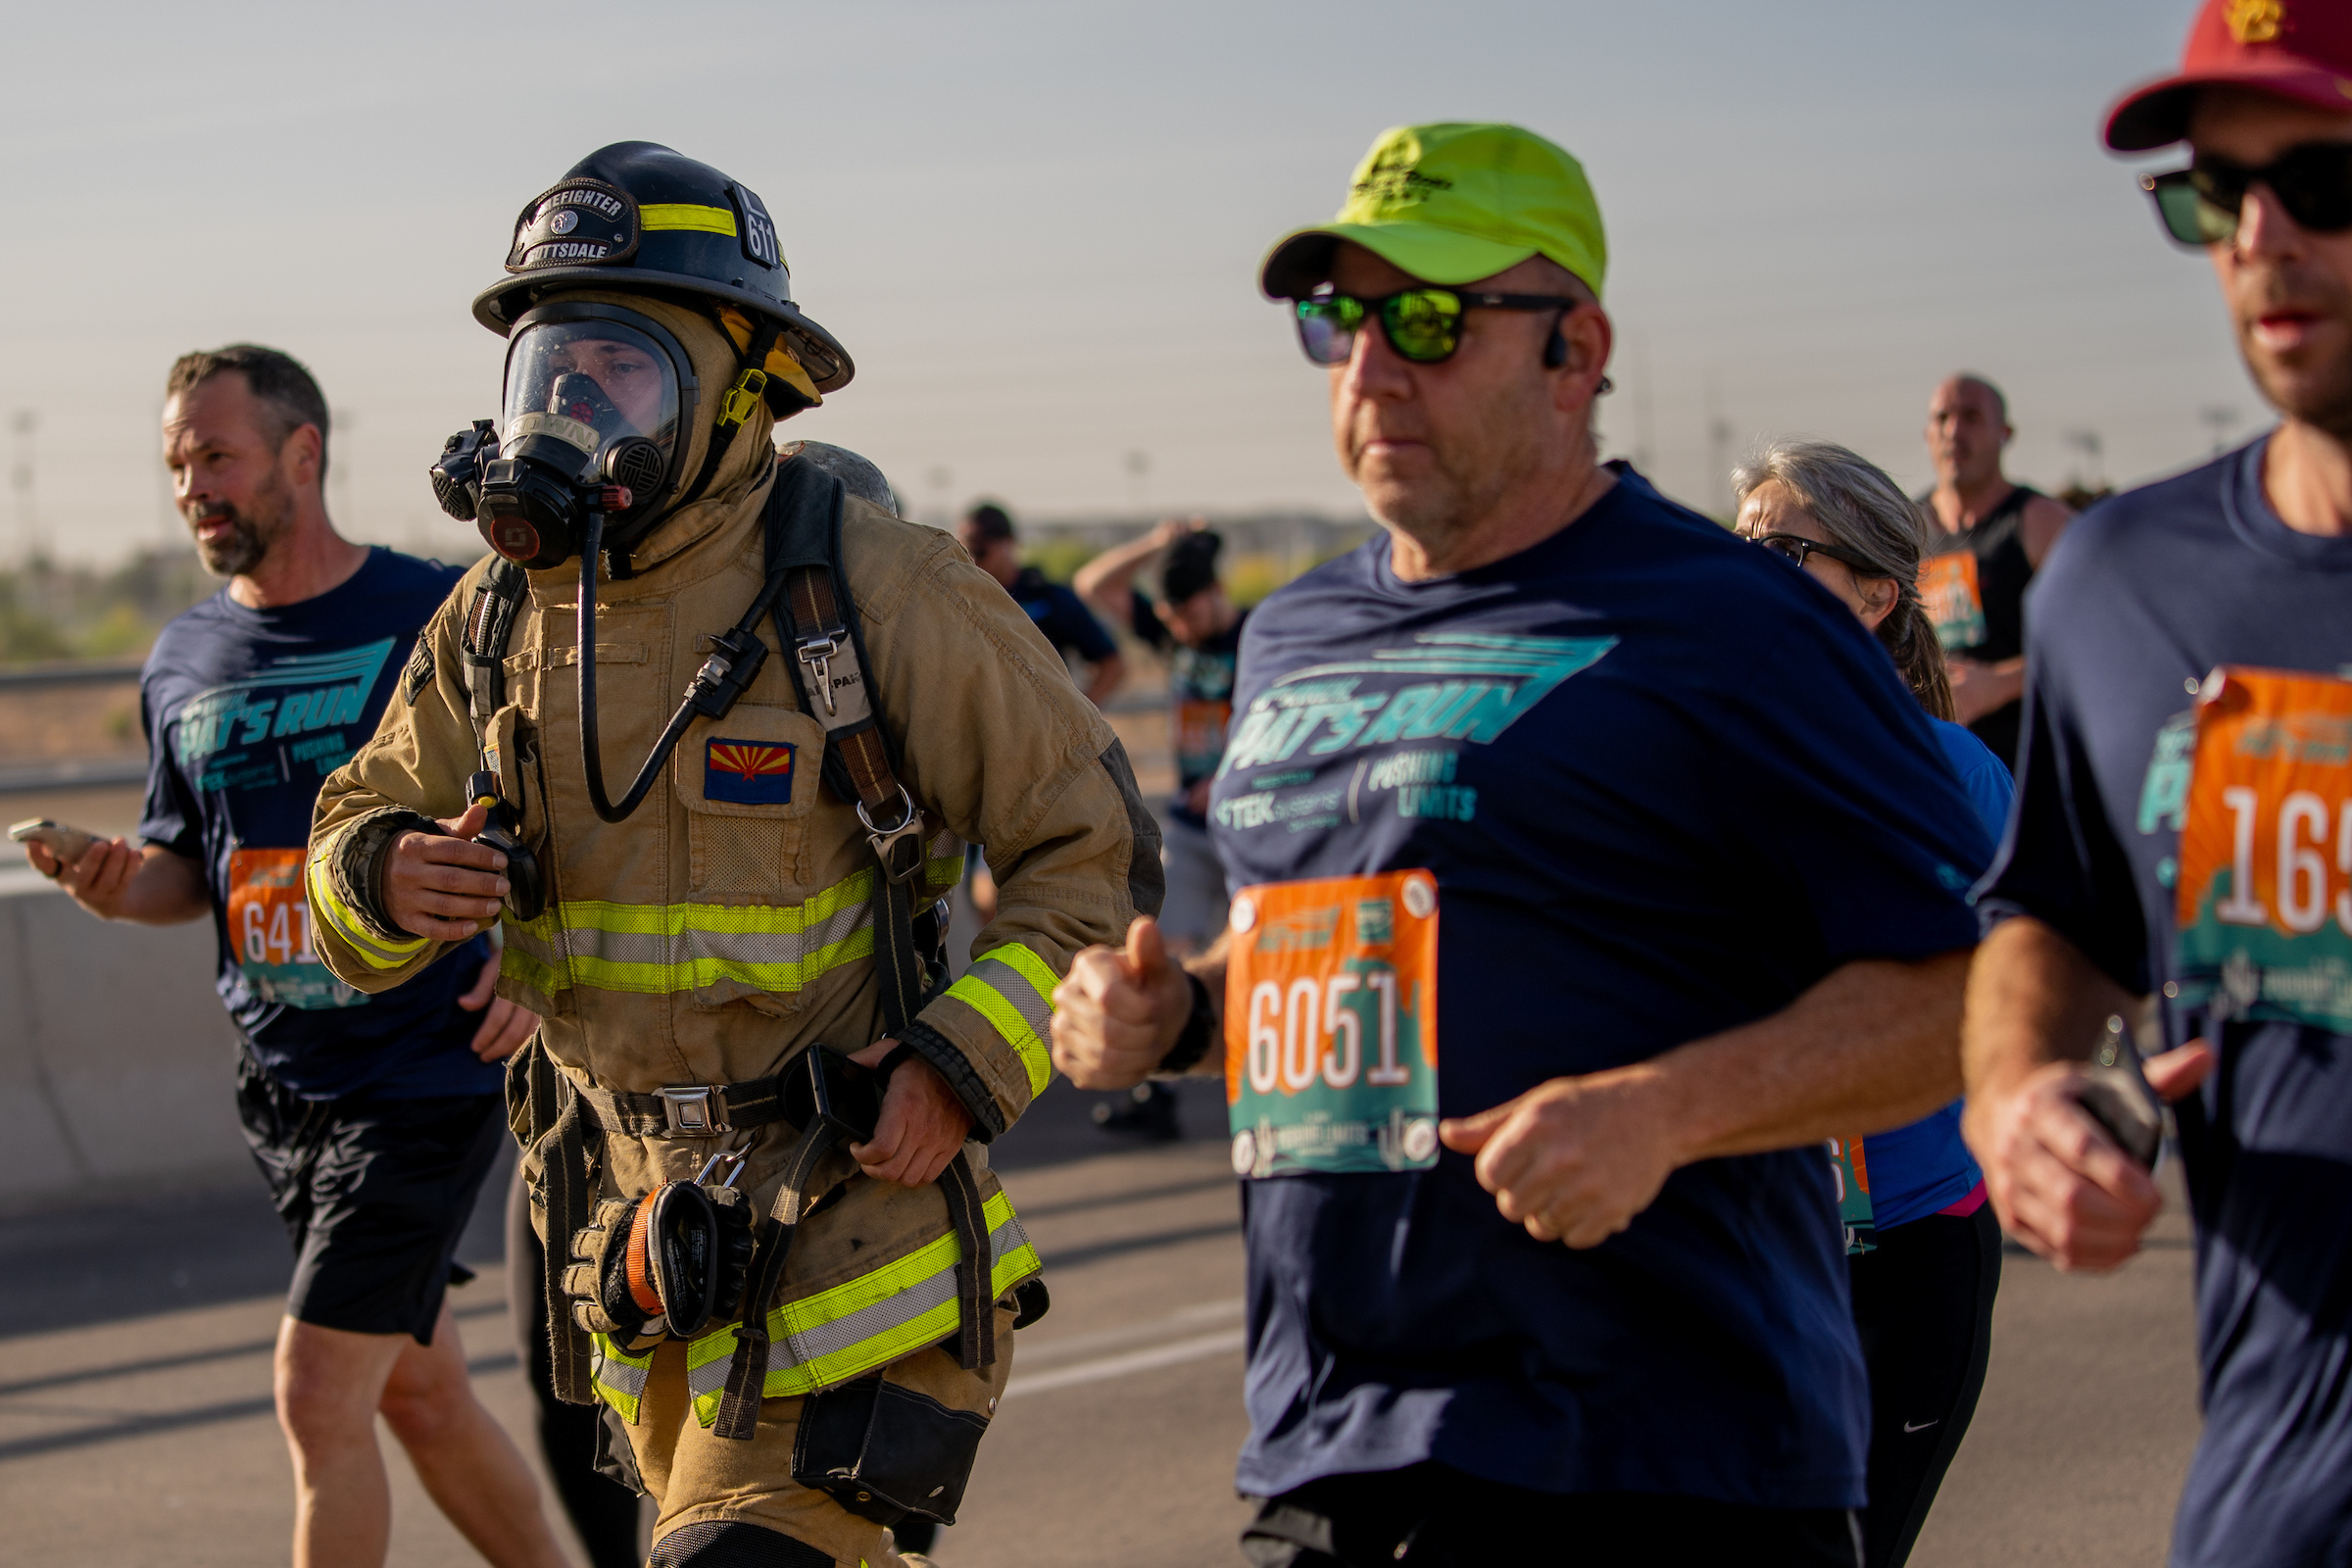 man wearing firefighter equipment run in race